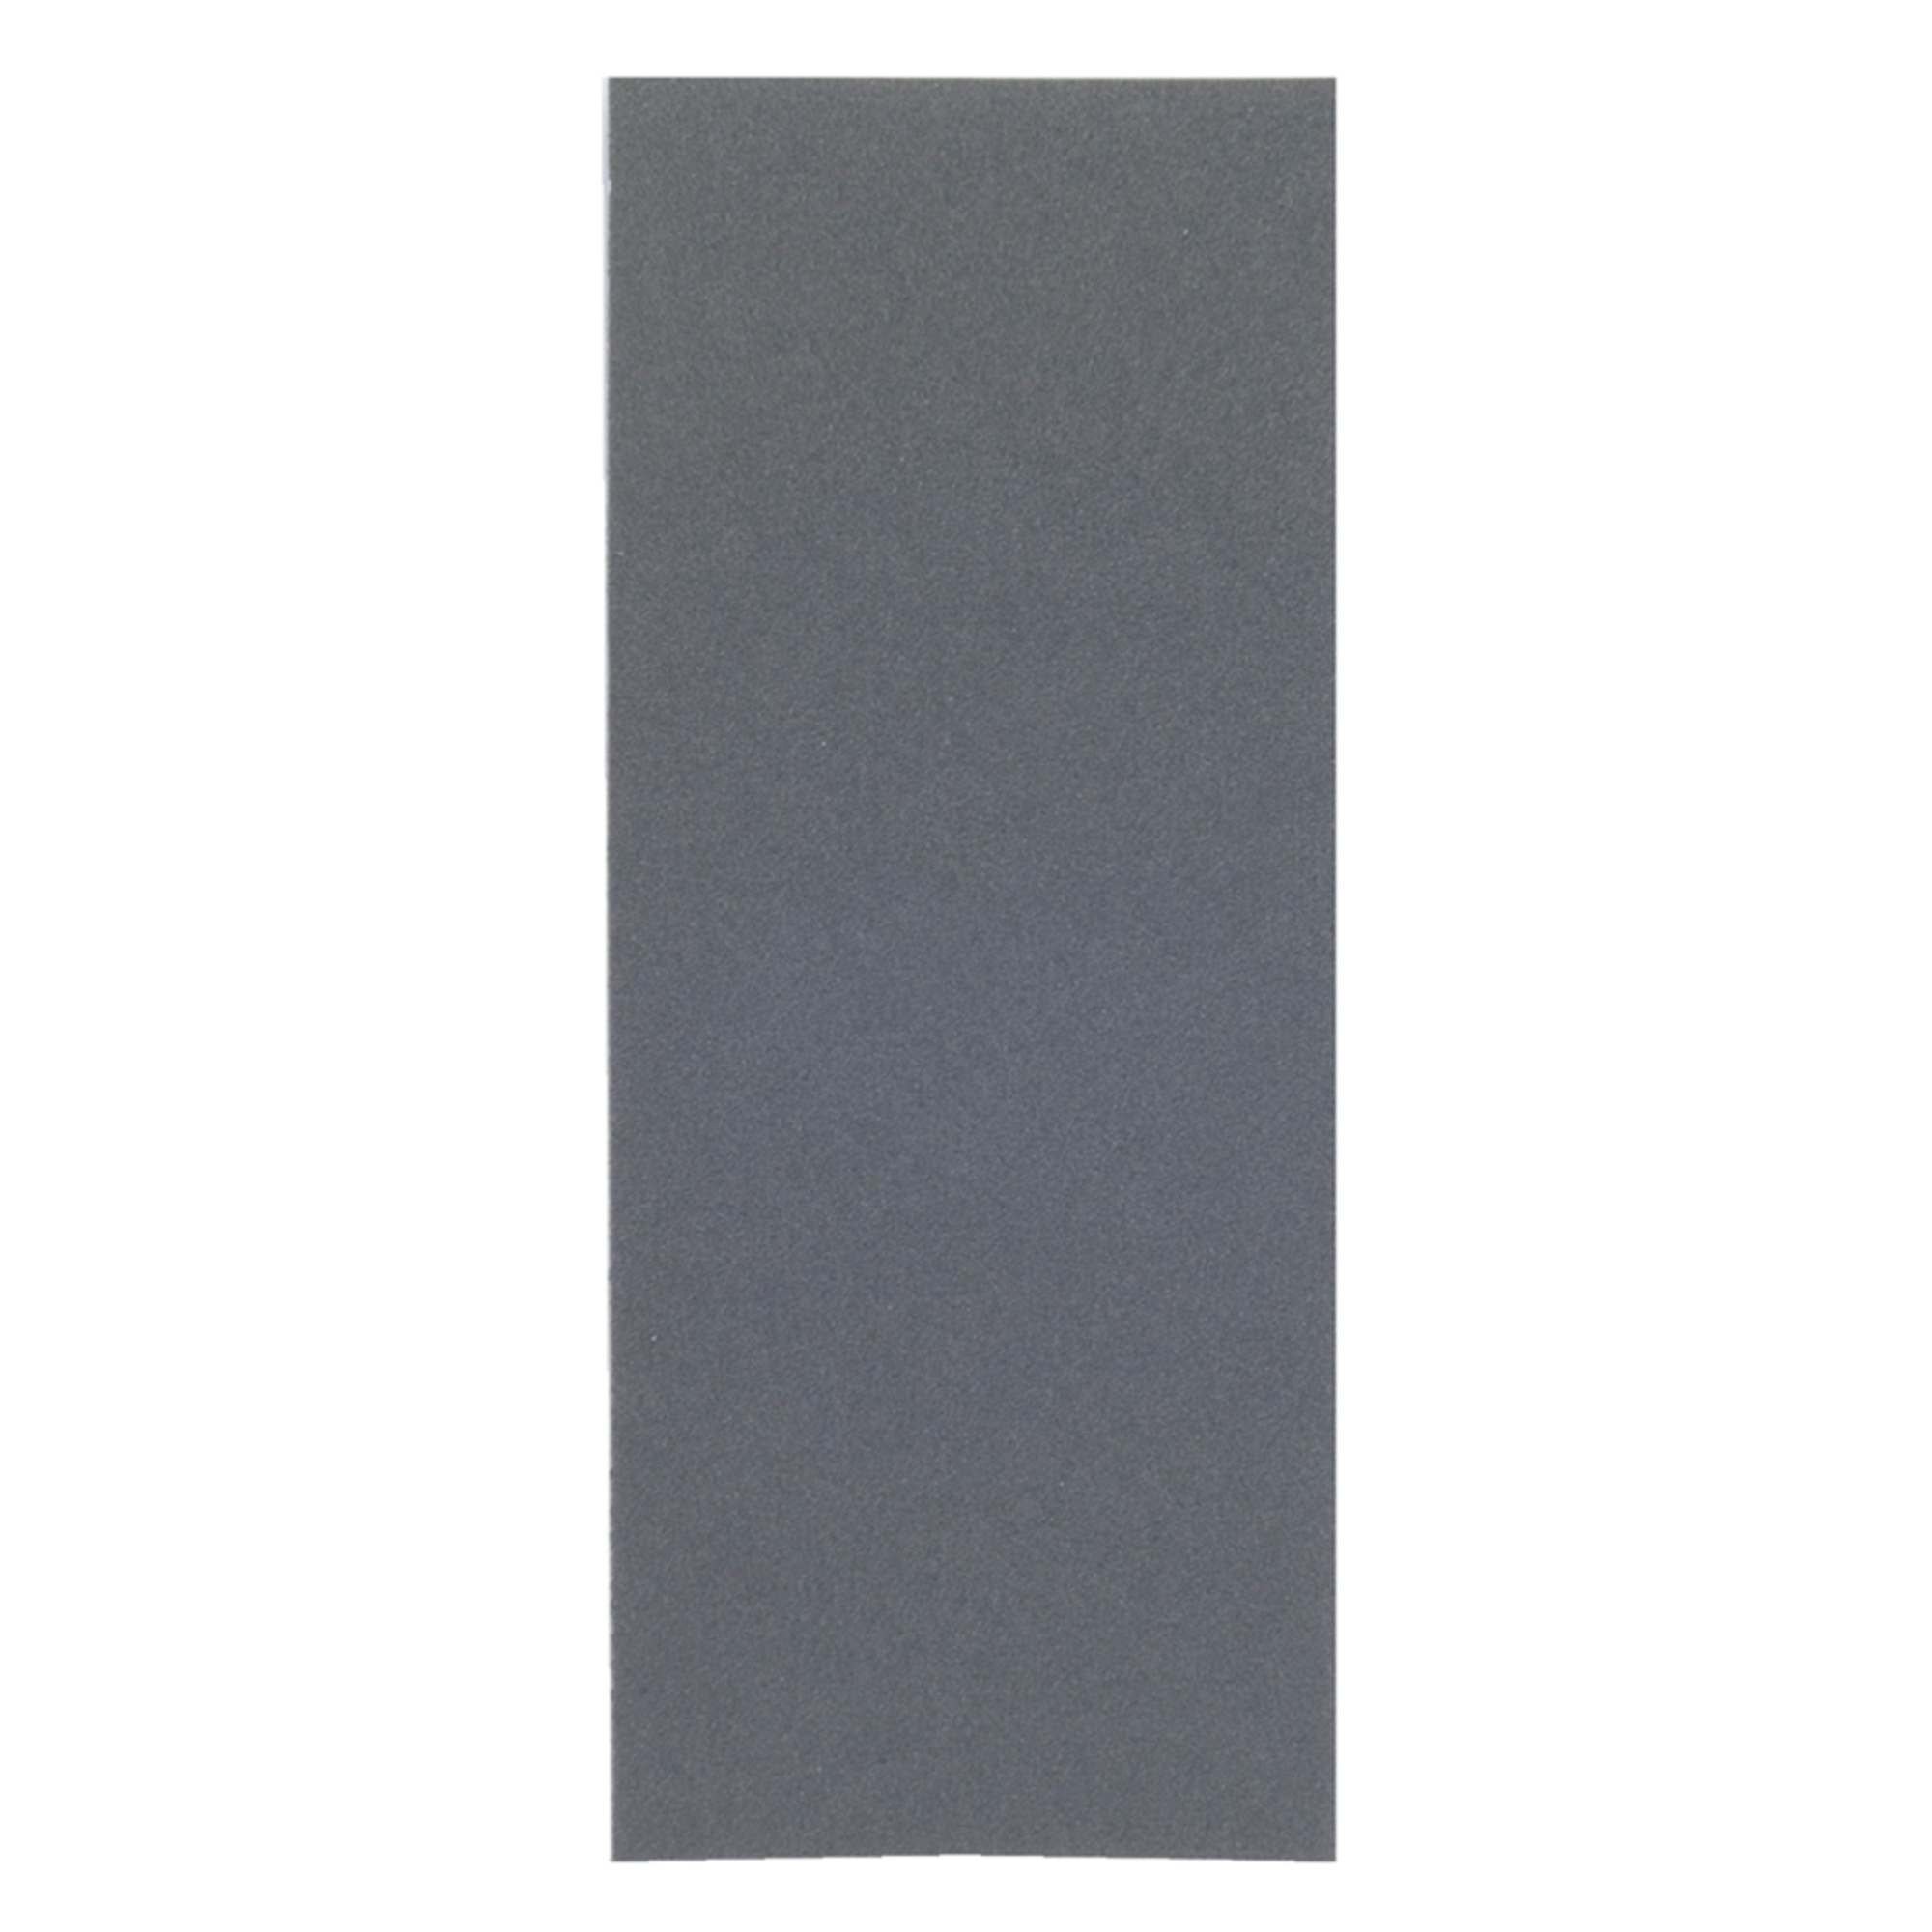 Norton® Blue-Bak™ 66261139354 T414 Coated Sandpaper Sheet, 9 in L x 3-2/3 in W, 400 Grit, Super Fine Grade, Silicon Carbide Abrasive, Paper Backing